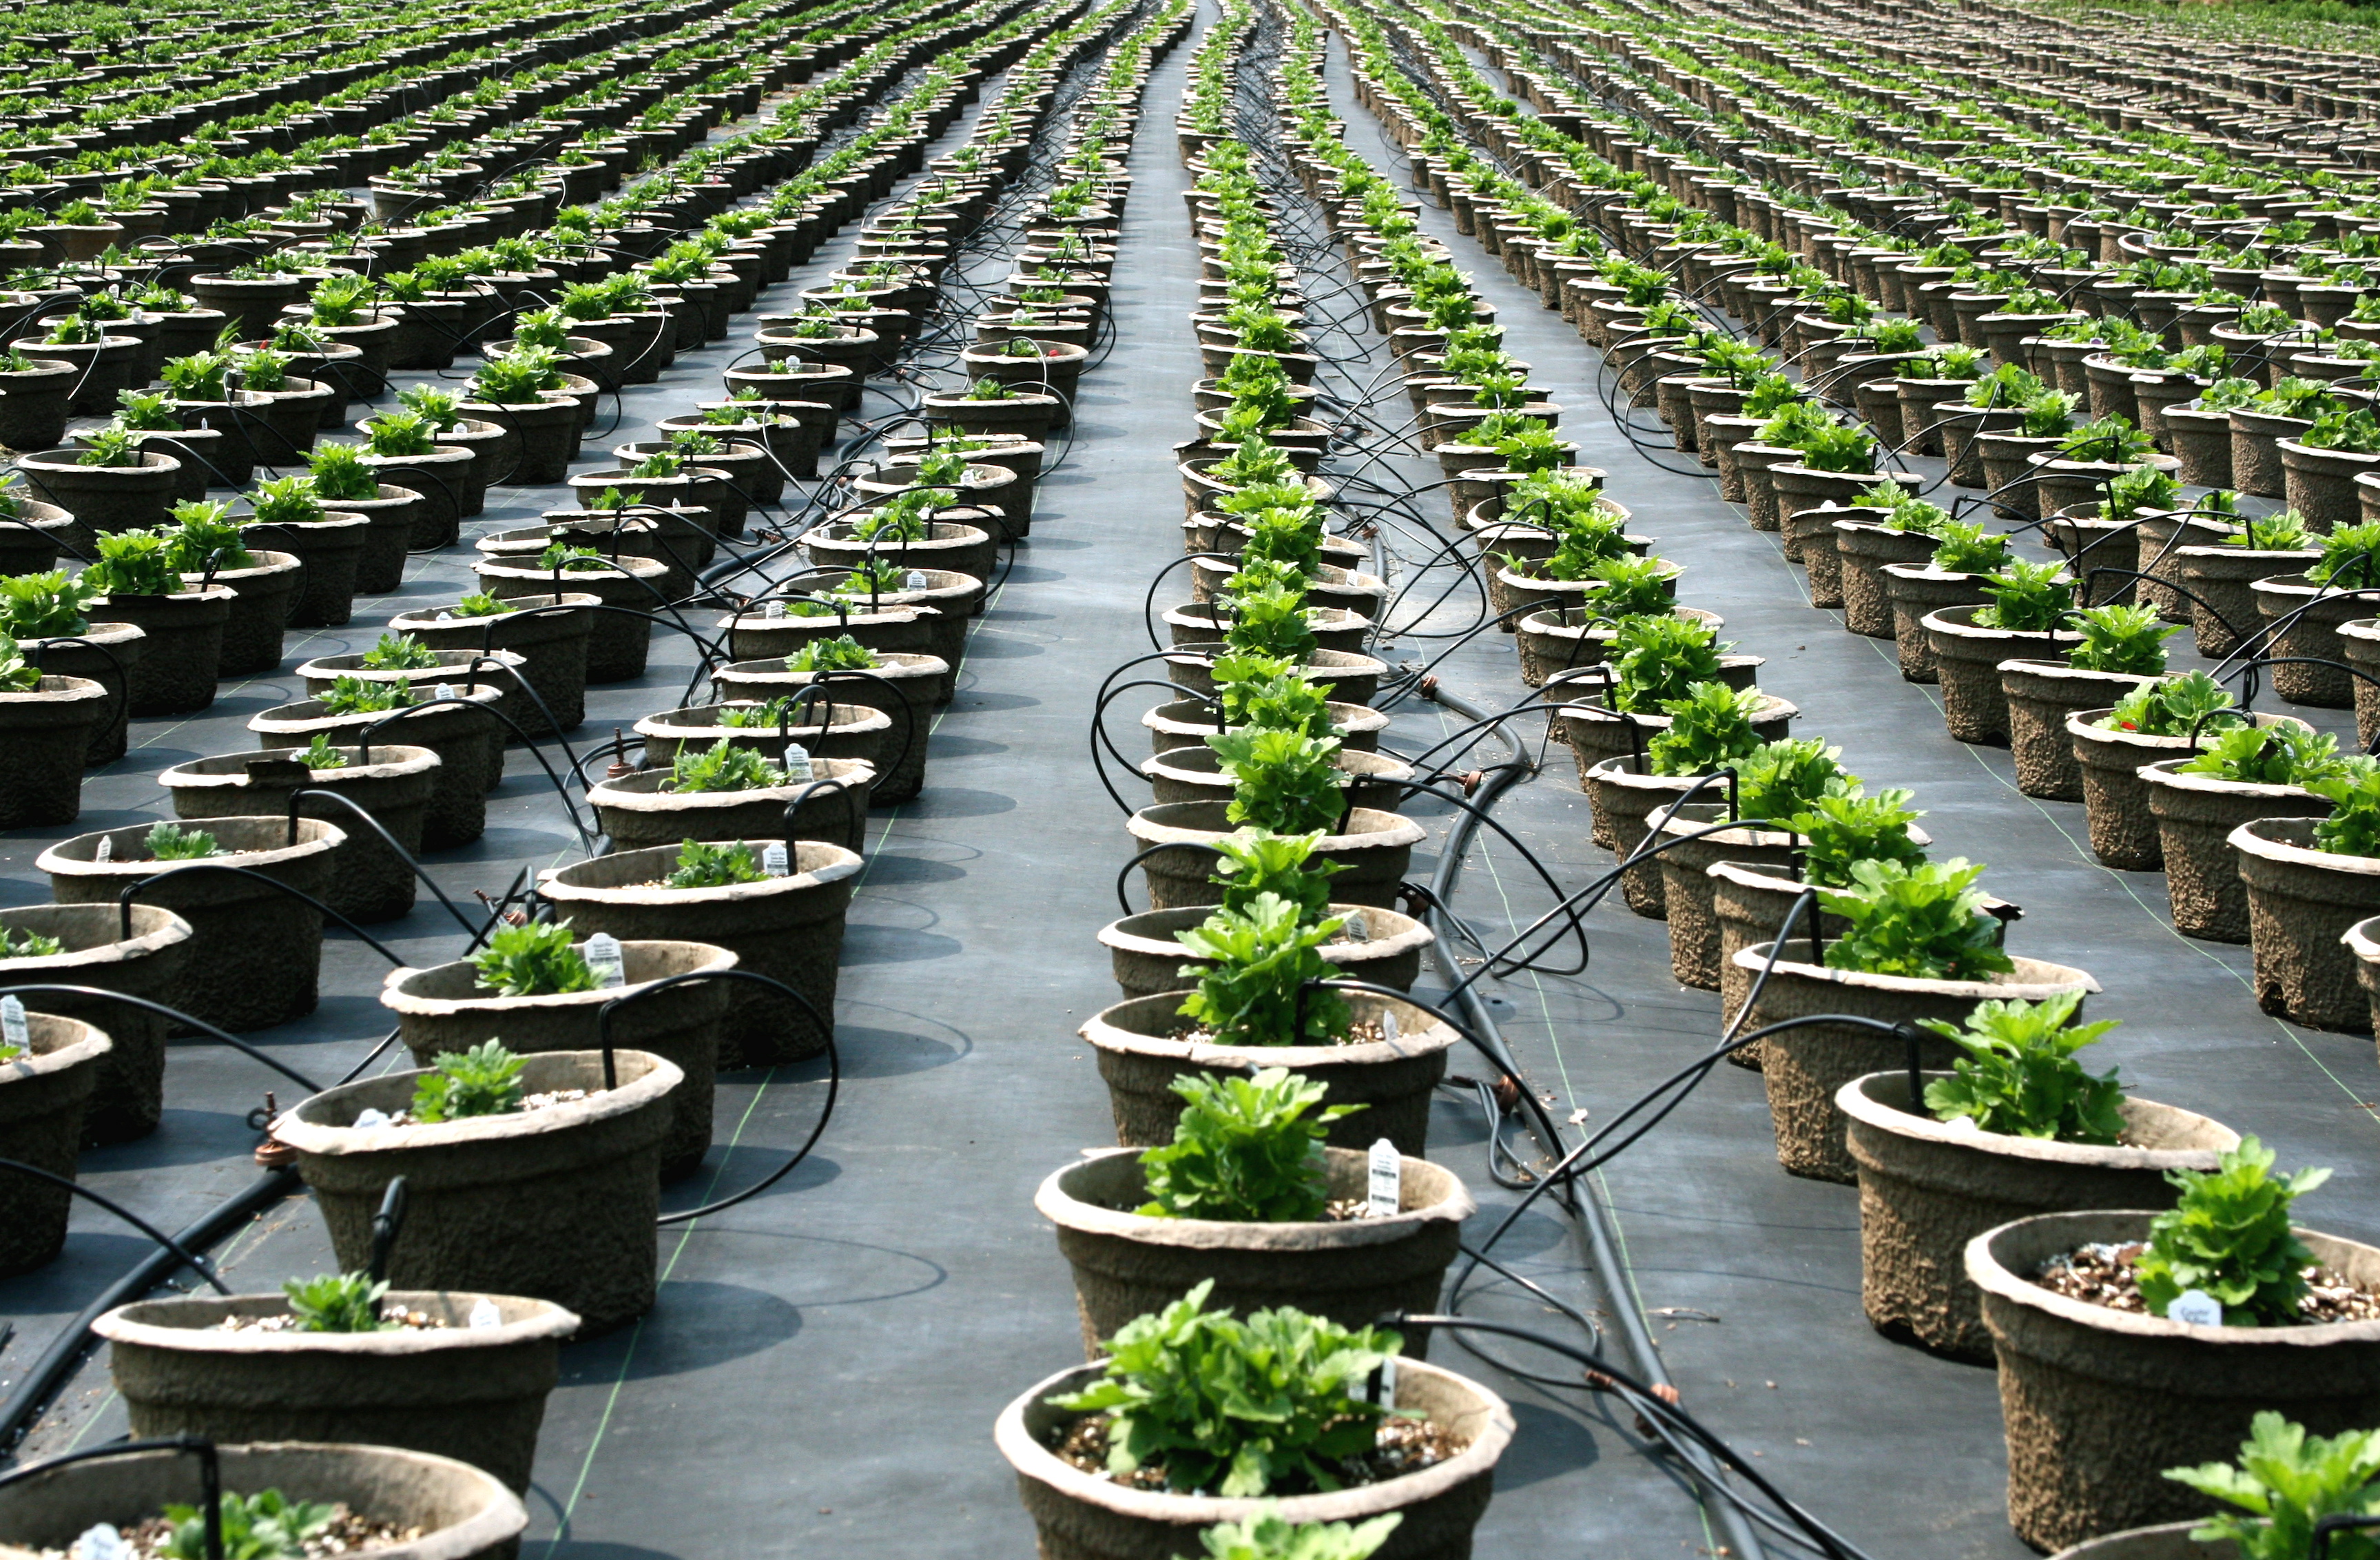 File:Plant nursery, pot rows.jpg - Wikimedia Commons